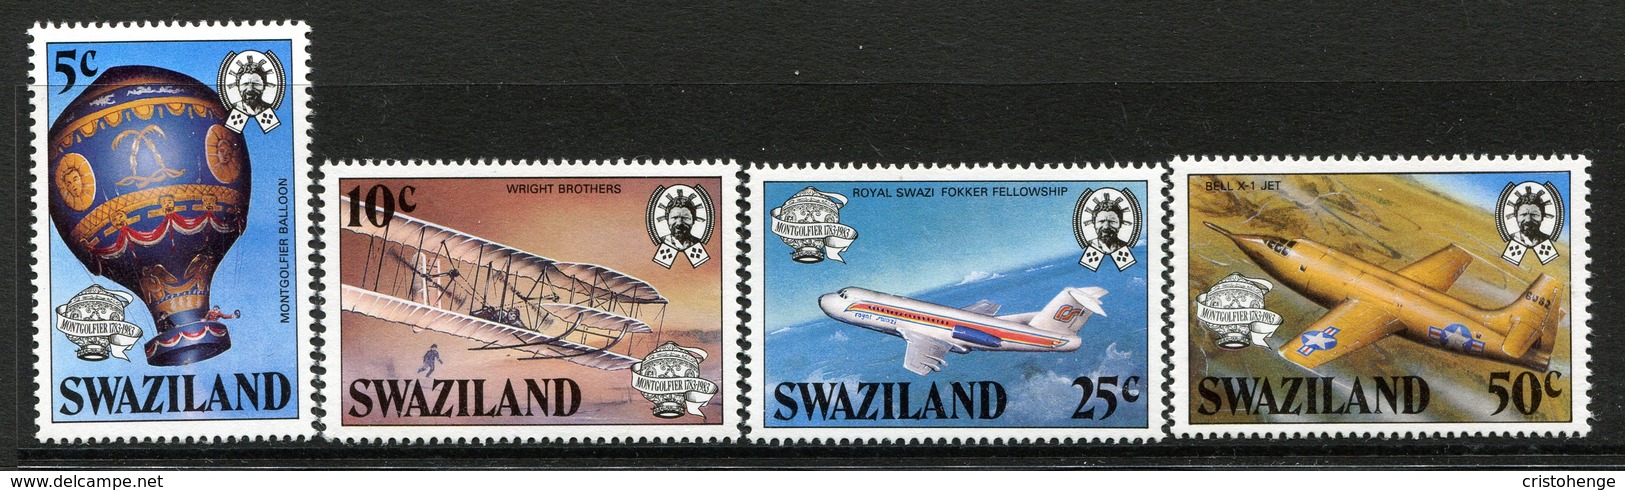 Swaziland 1983 Bicentenary Of Manned Flight Set MNH (SG 431-434) - Swaziland (1968-...)